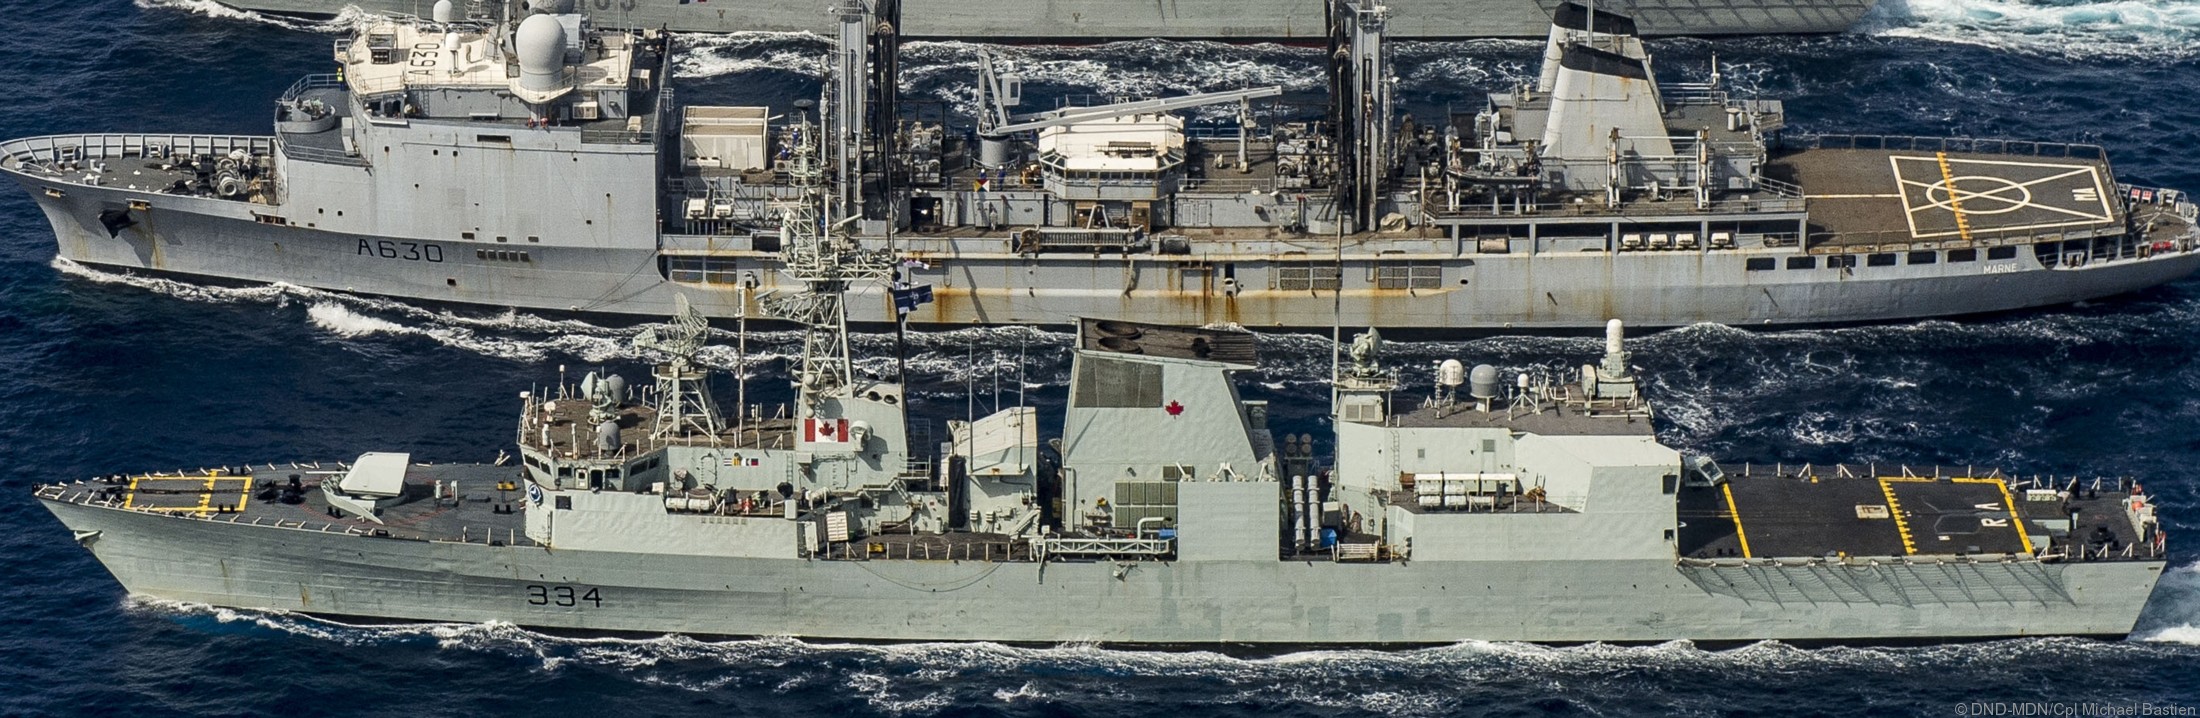 ffh-334 hmcs regina halifax class helicopter patrol frigate ncsm royal canadian navy 64